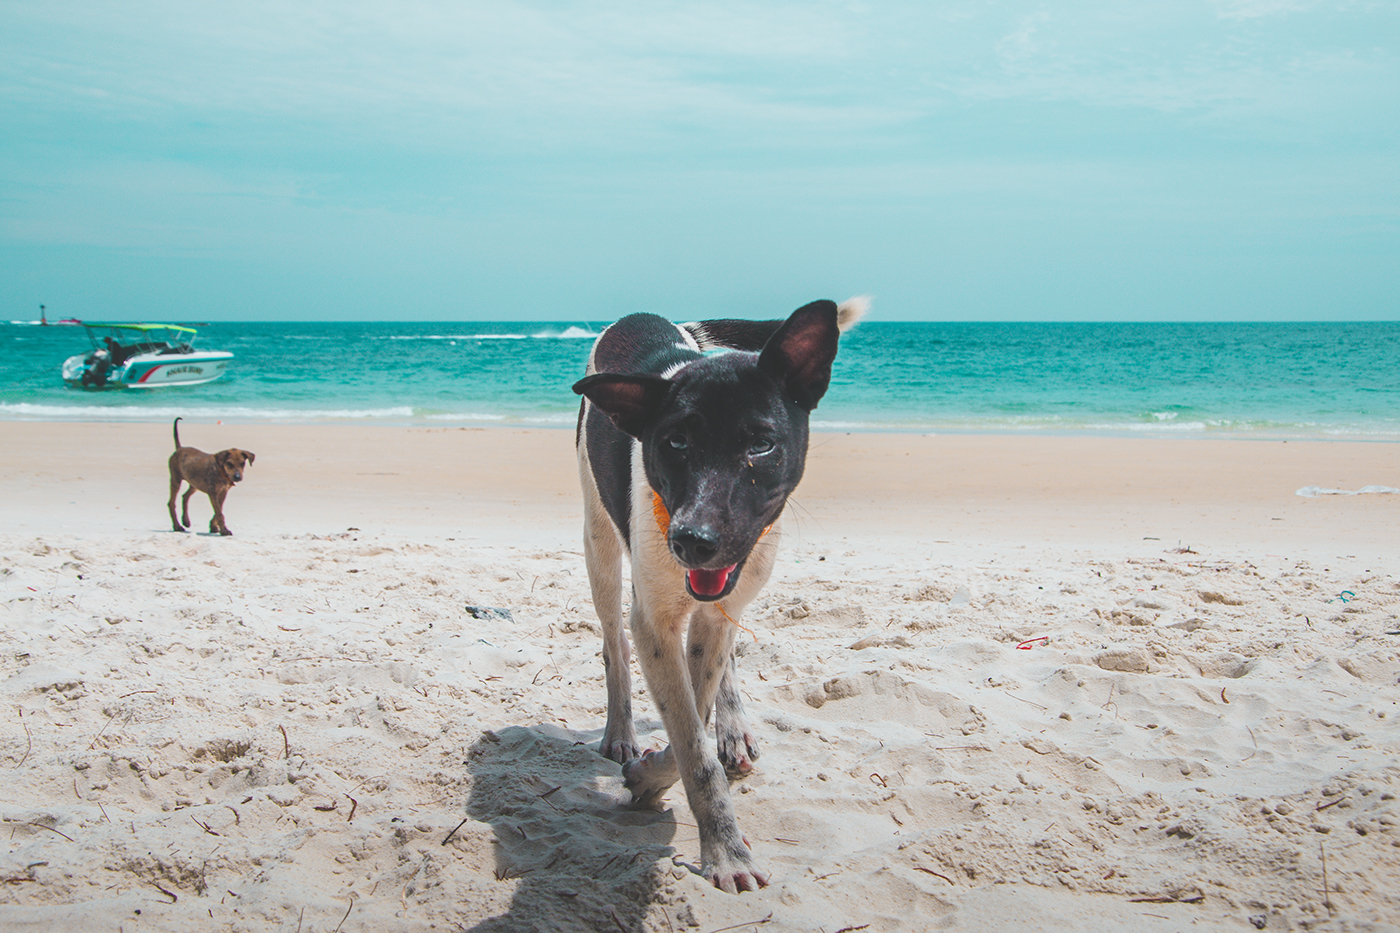 Thailand kohsamed getaway Travel Island Tropical beach dogs sunset